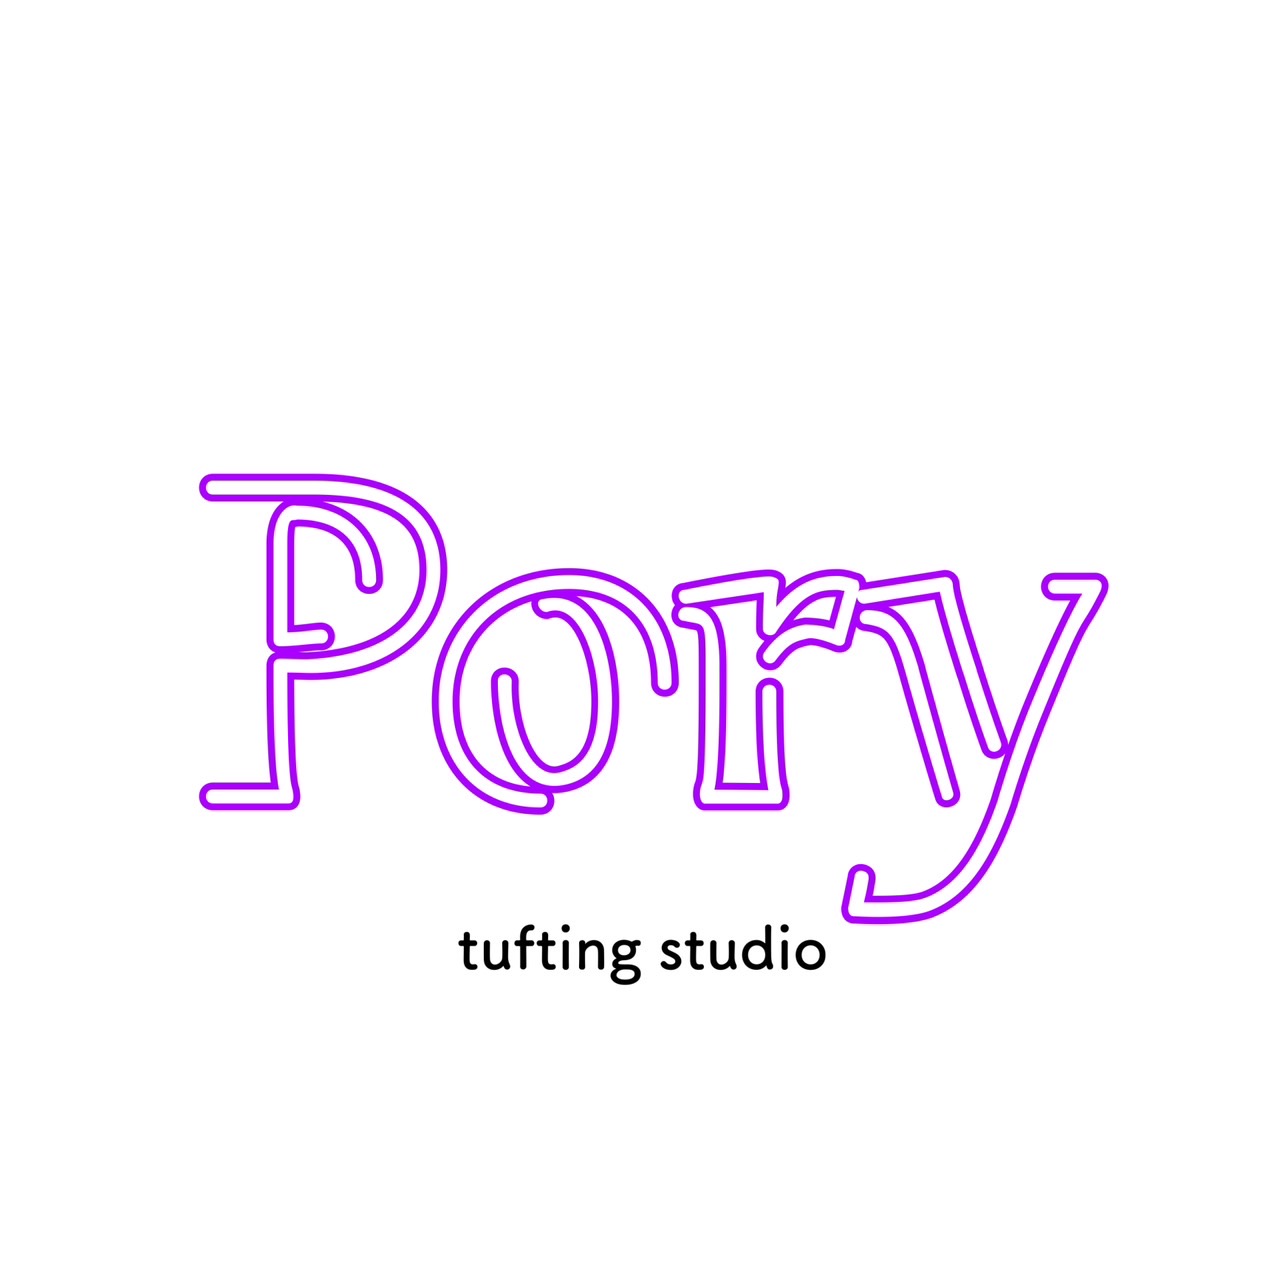 Pory tufting studio